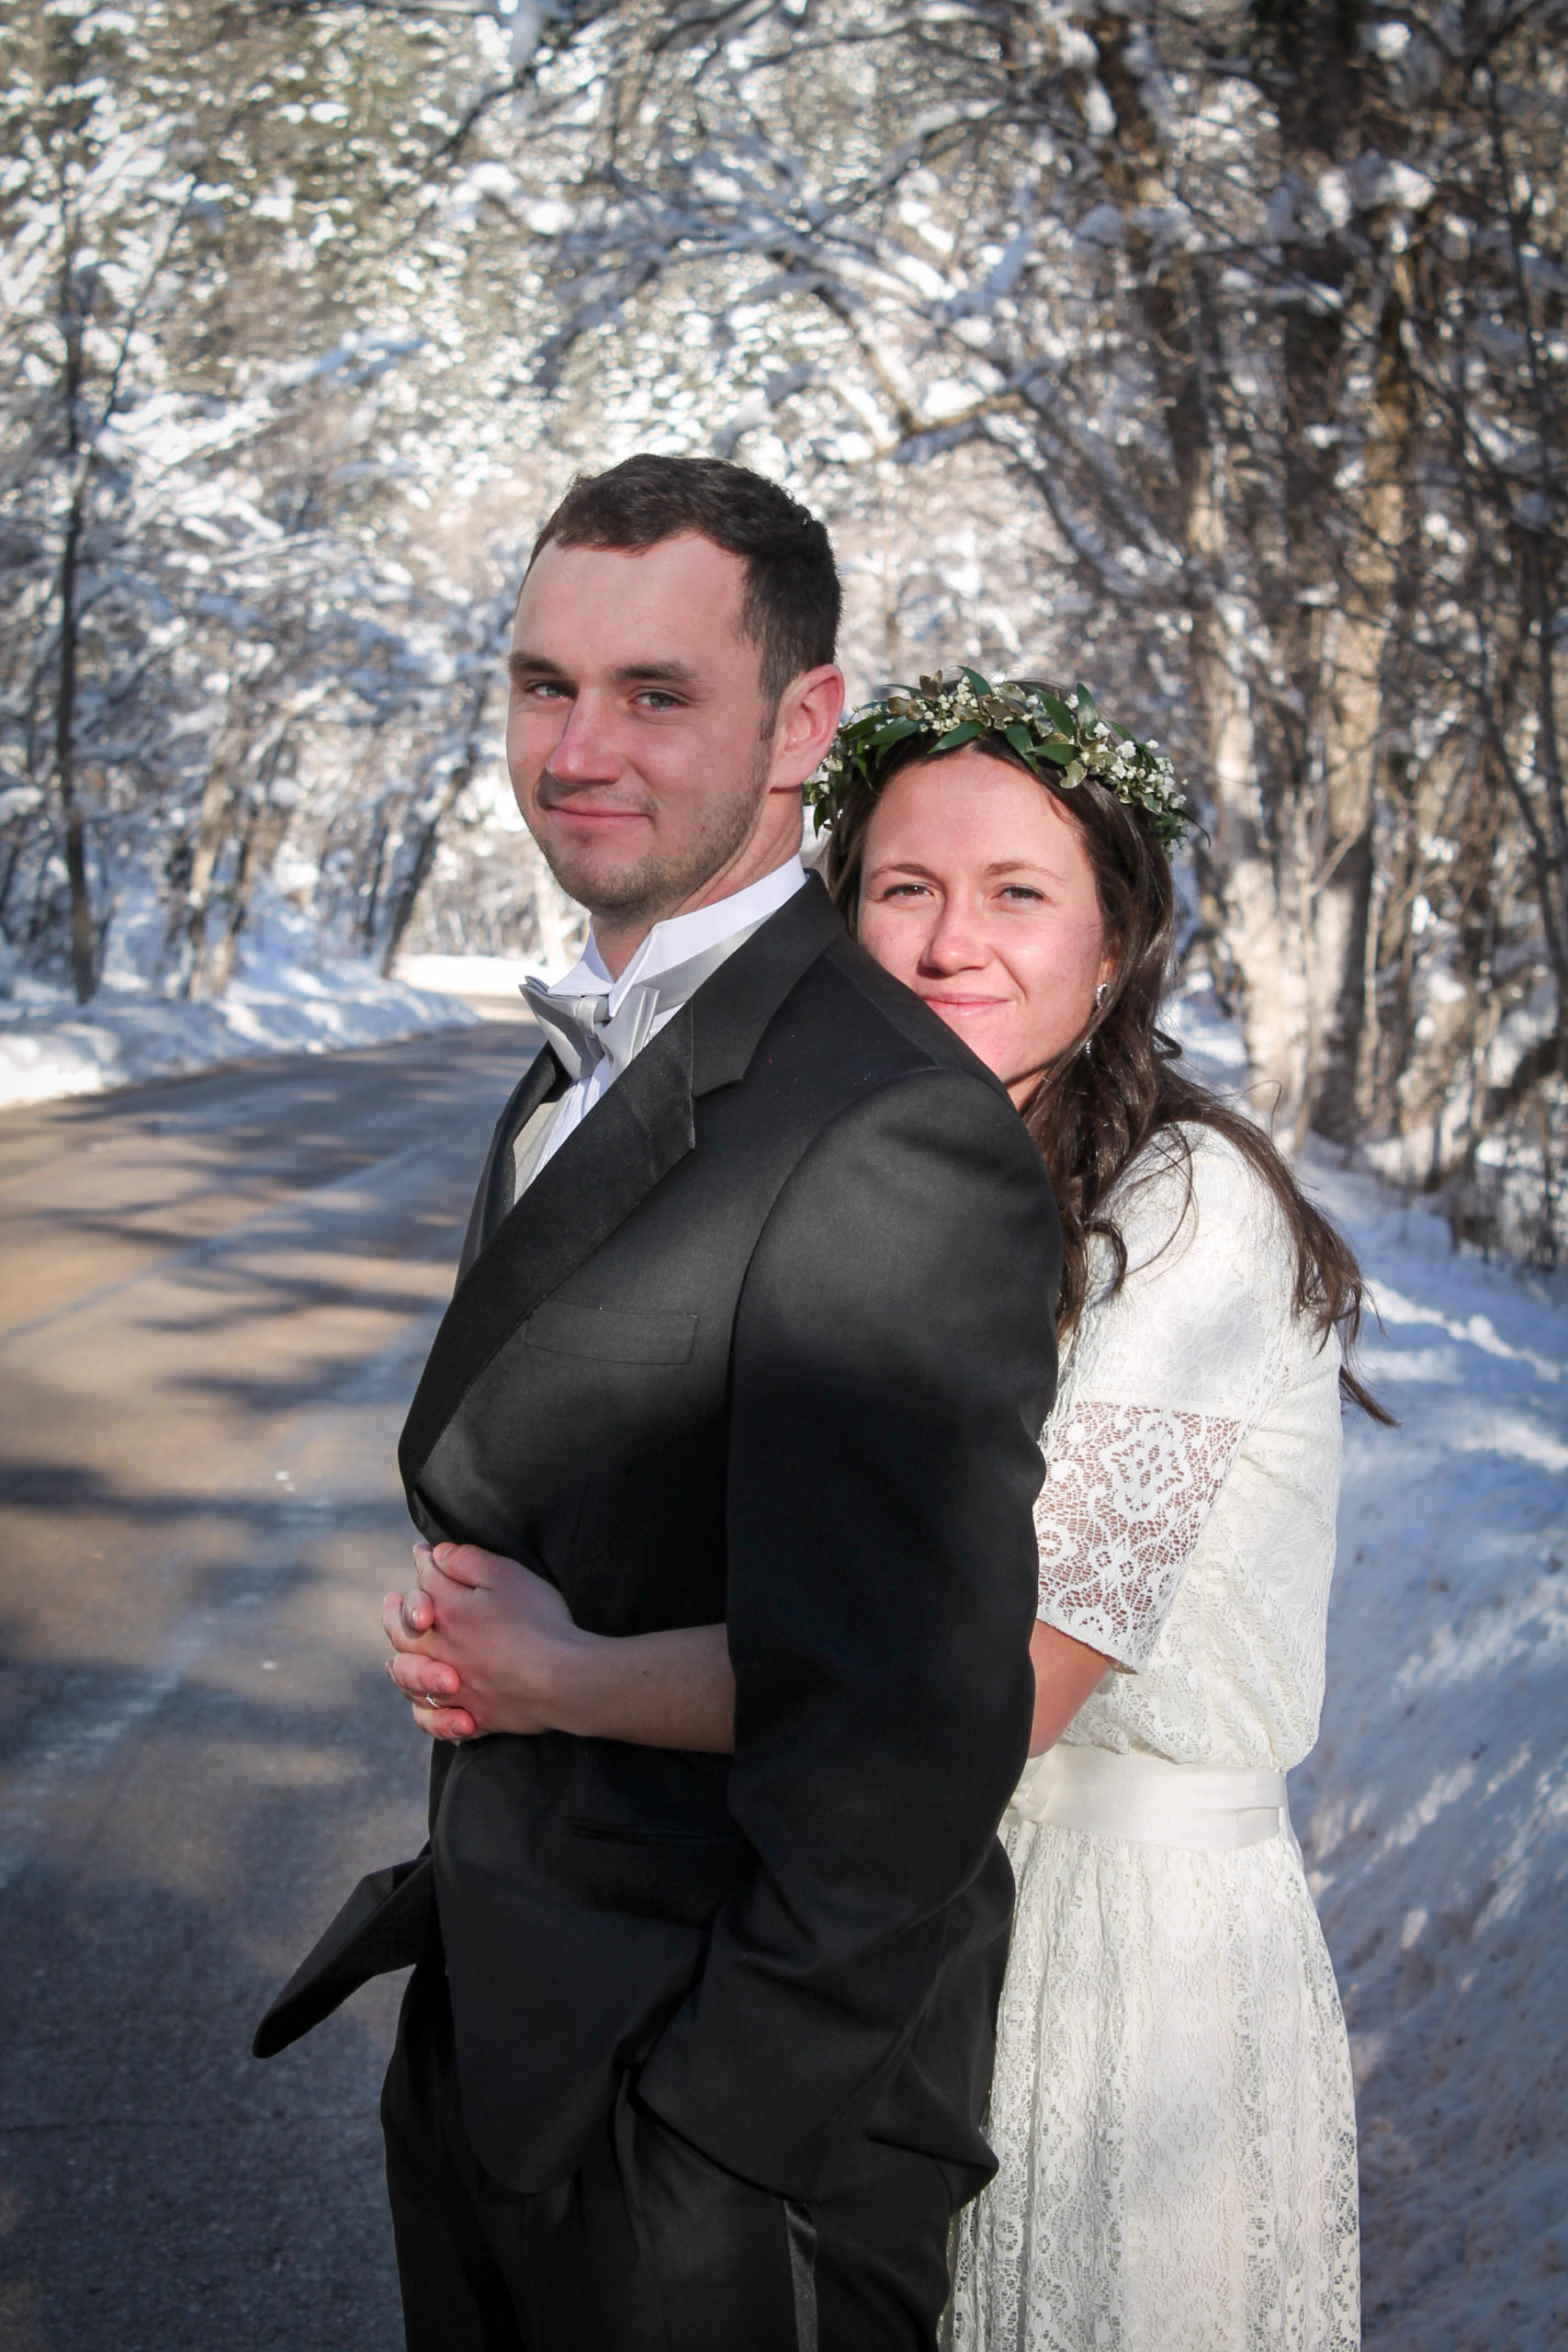 Tori & Austin's Waite Winter Wedding Photoshoot | Captured By Lexi In Utah